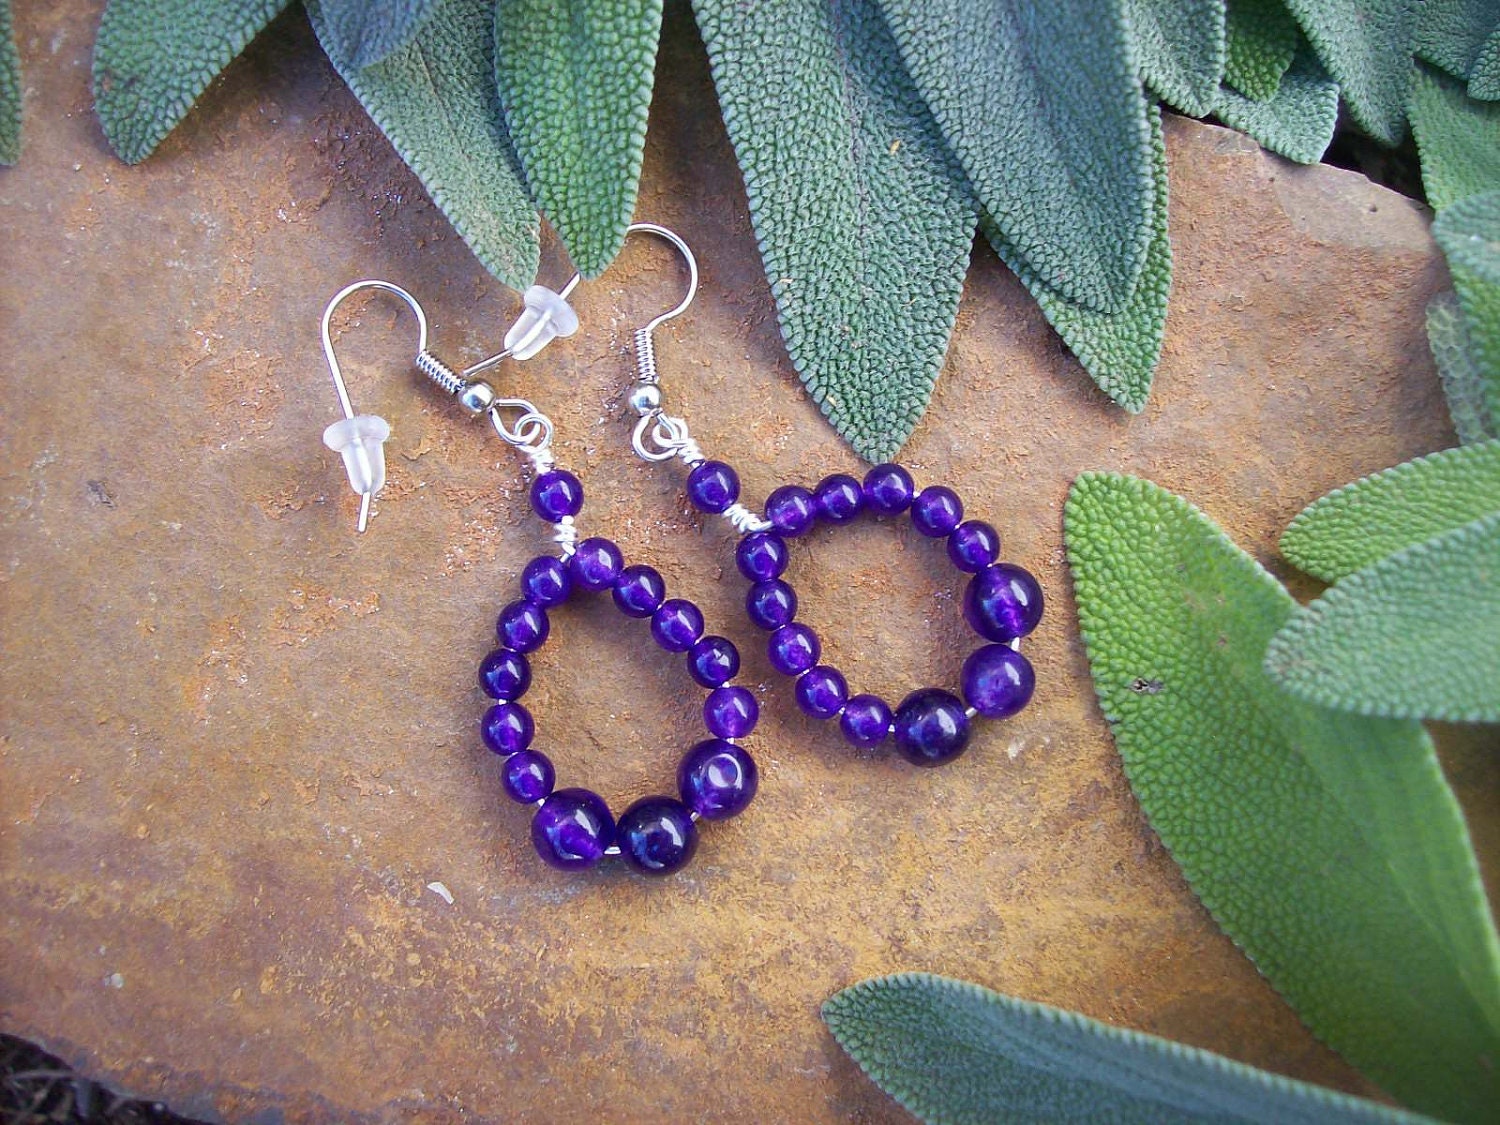 Polished Purple Amethyst Gemstone Bead Circle Hoop Earrings on Surgical Steel Wire - OOAK Nature Inspired Gift For Women - MountainUrsusDesigns